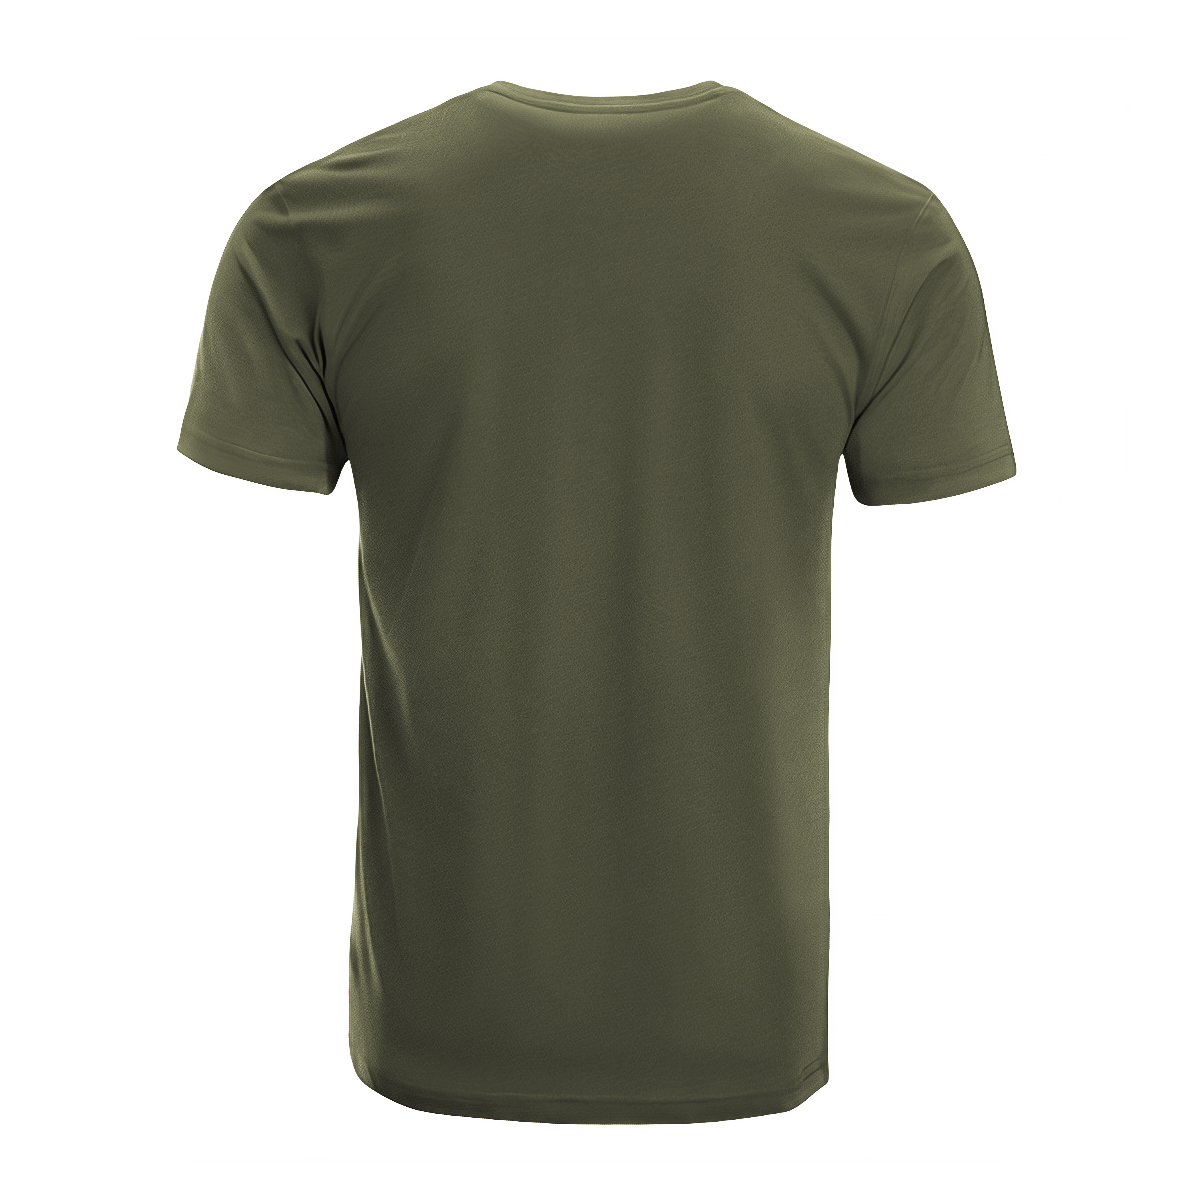 Clelland Tartan Crest T-shirt - I'm not yelling style